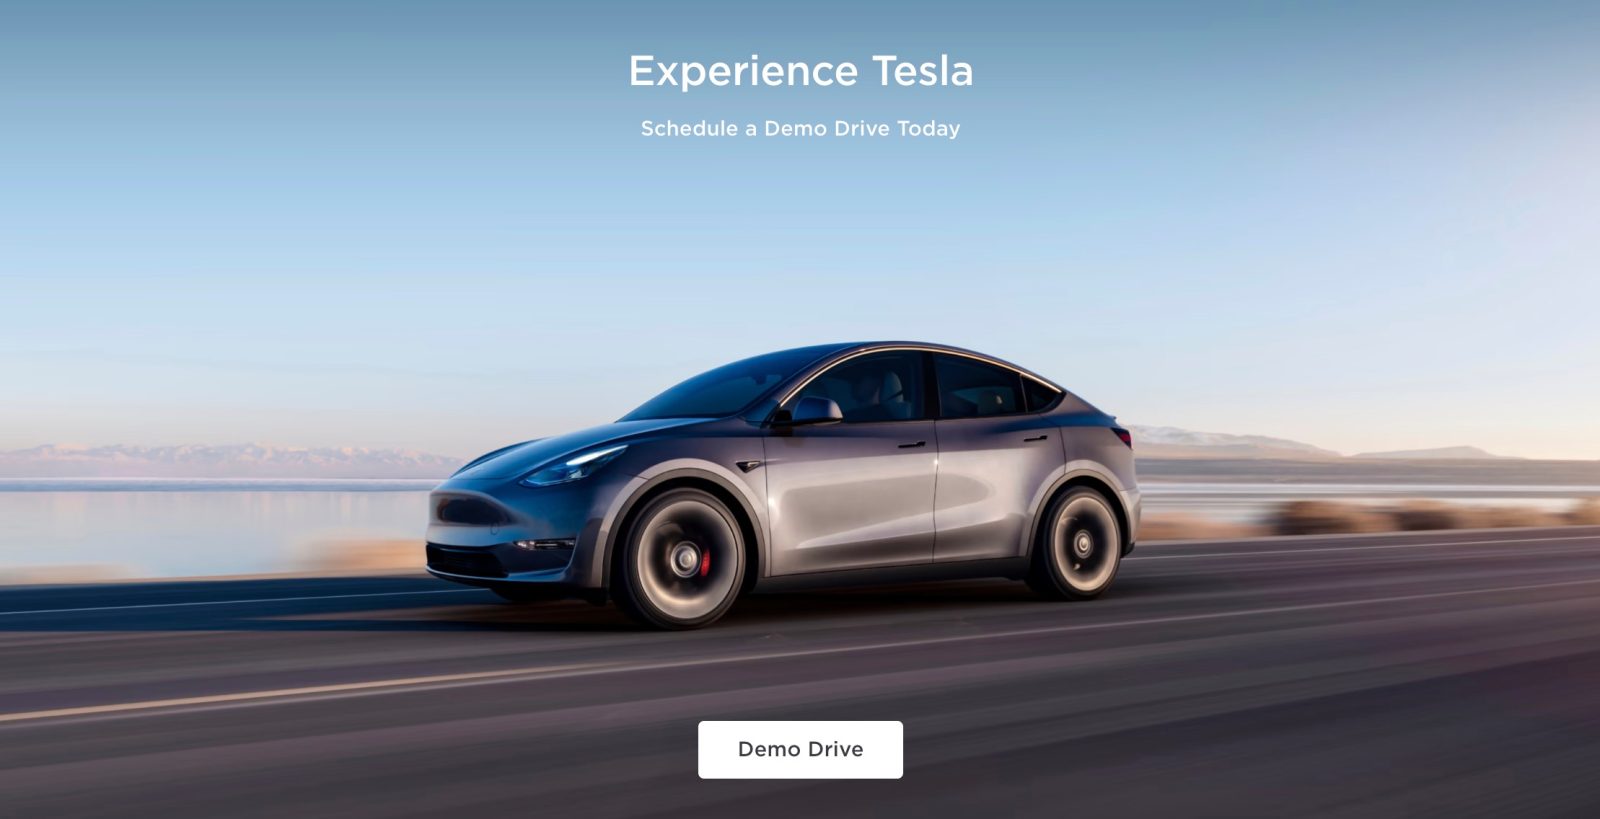 Tesla provides demo drives to its referral program